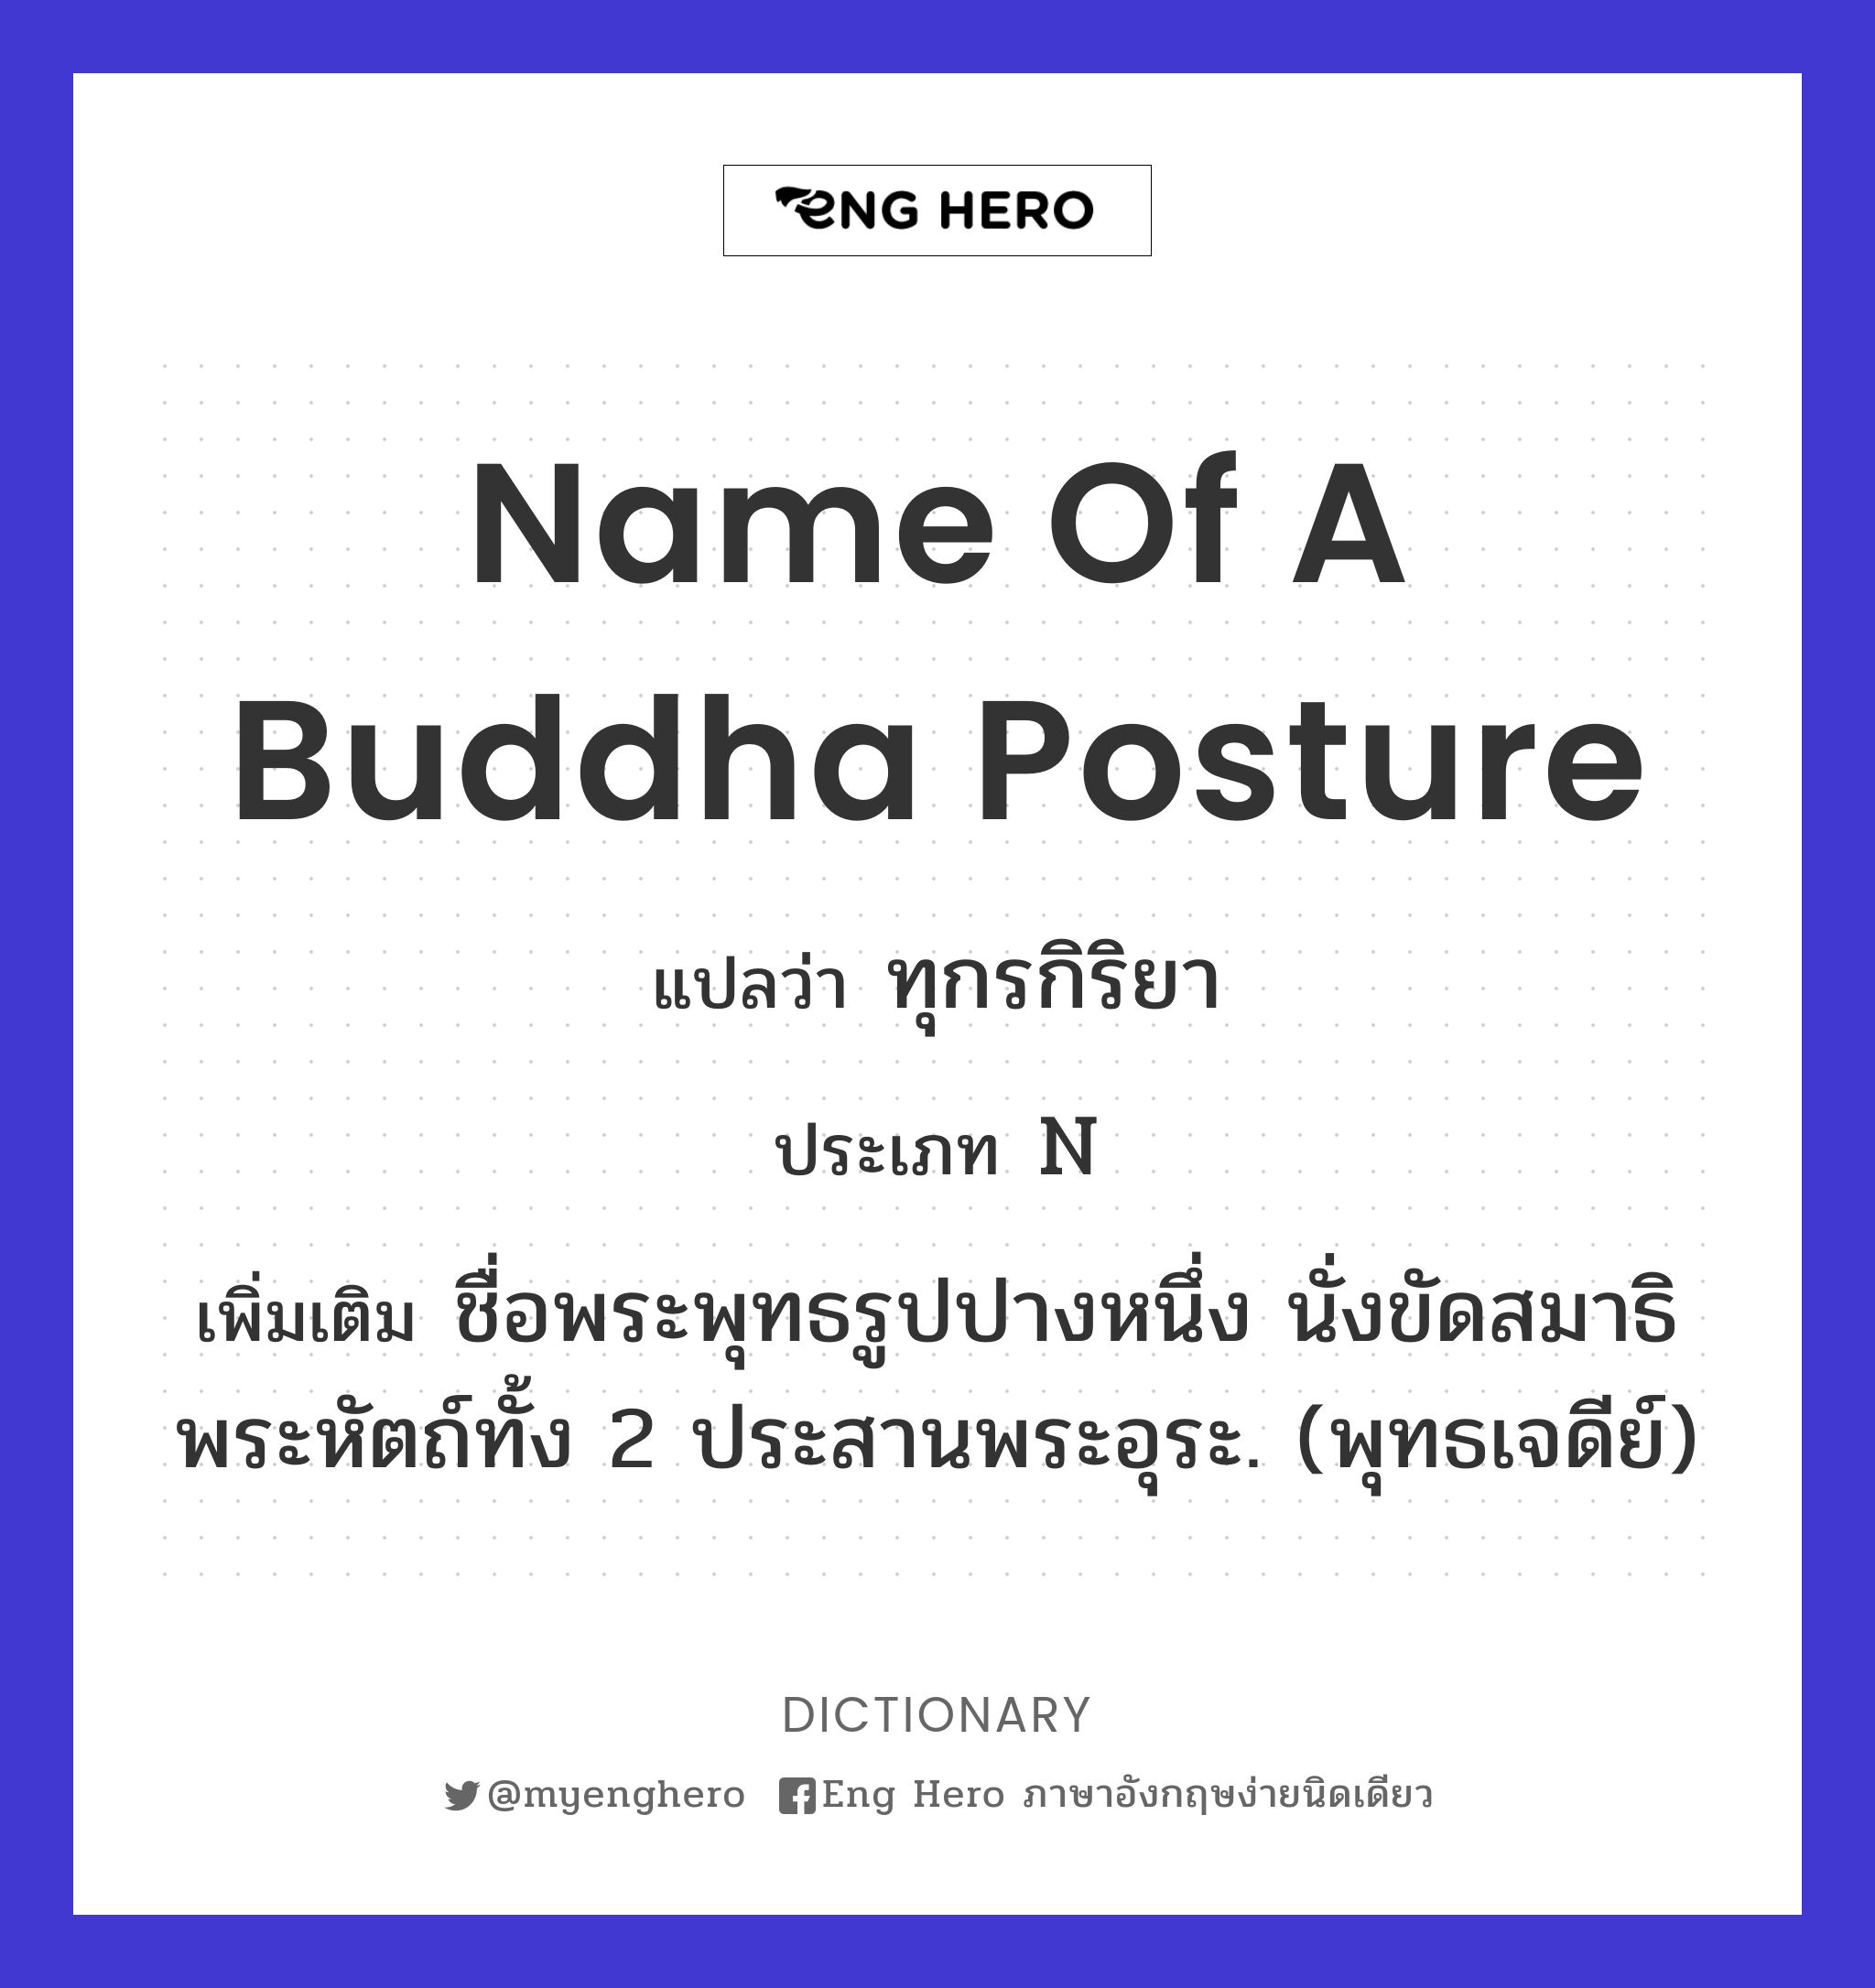 name of a Buddha posture